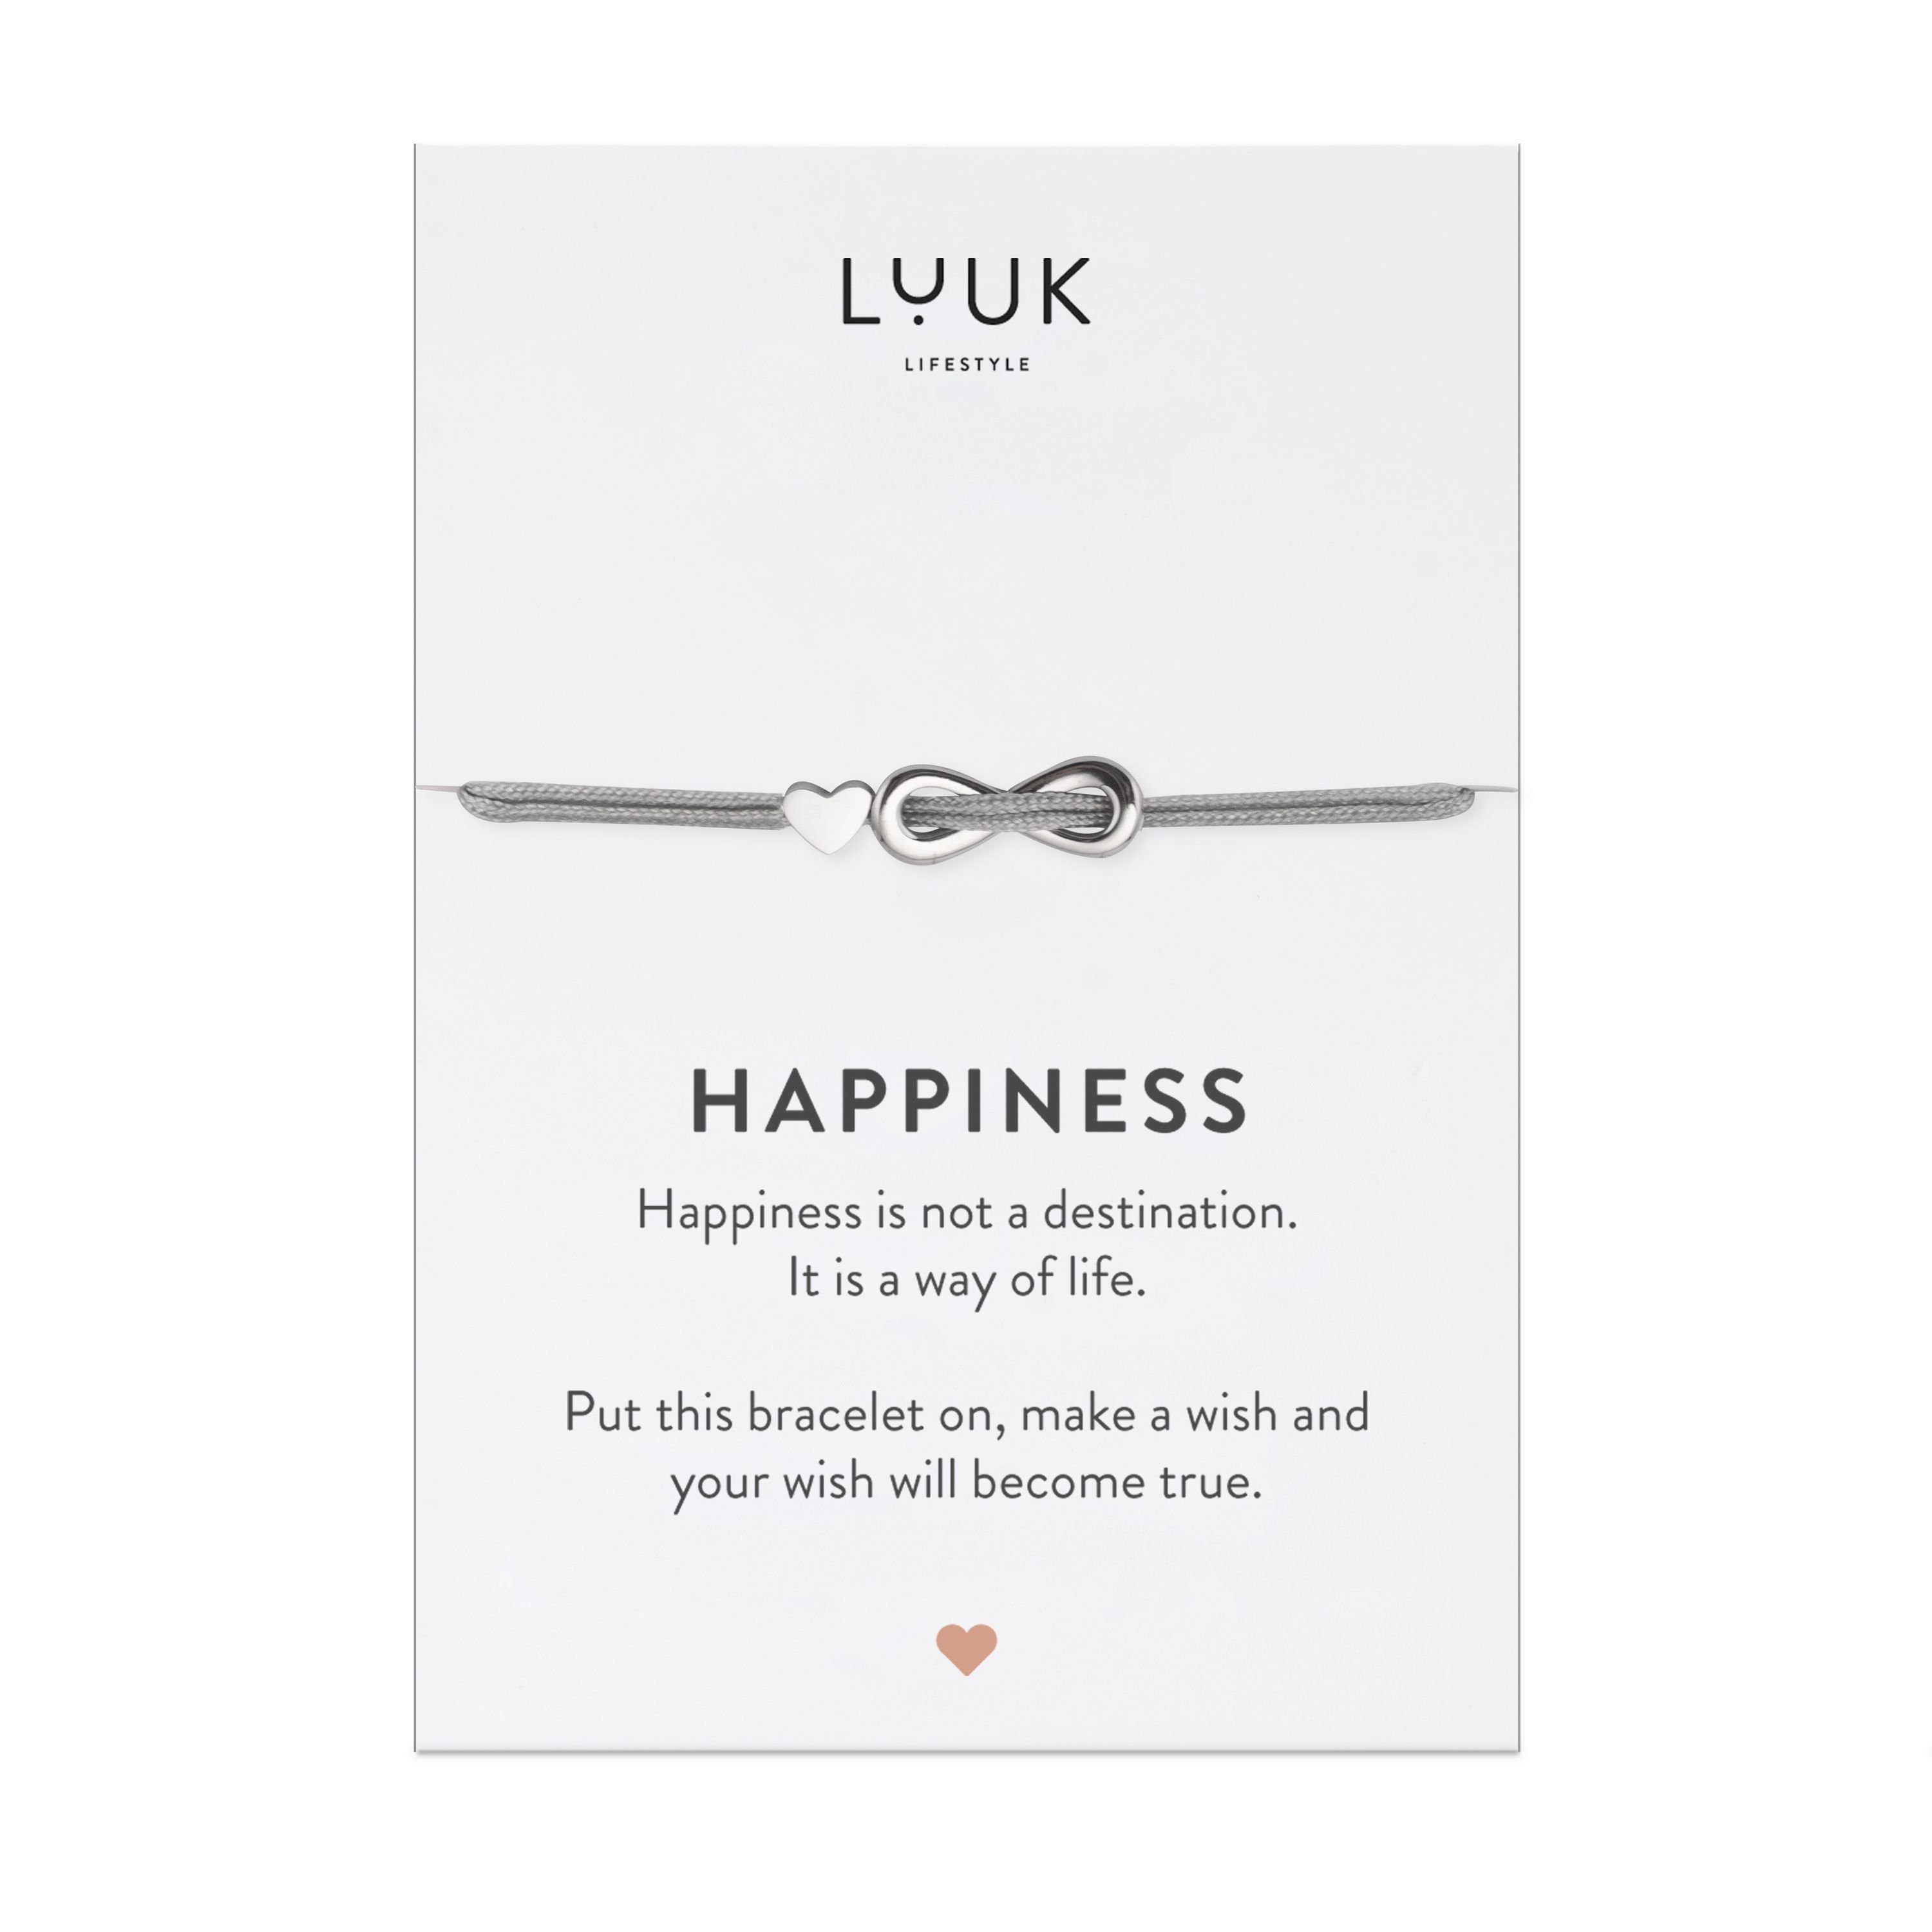 LUUK LIFESTYLE Freundschaftsarmband Infinity, handmade, mit Happiness Spruchkarte Silber | Armbänder